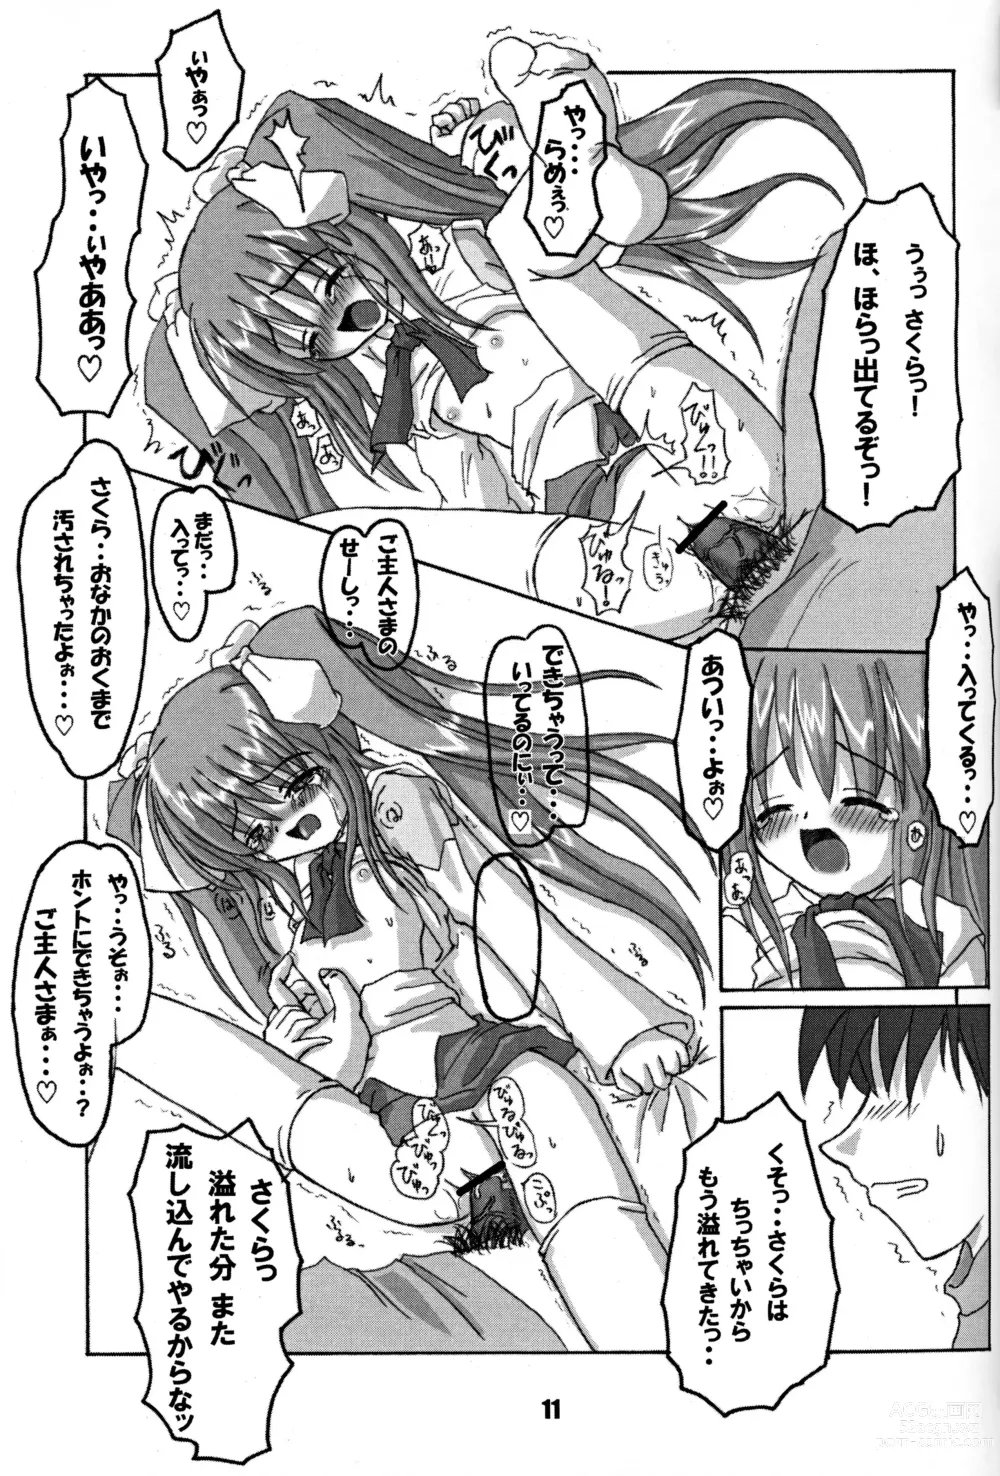 Page 10 of doujinshi Rollin 9